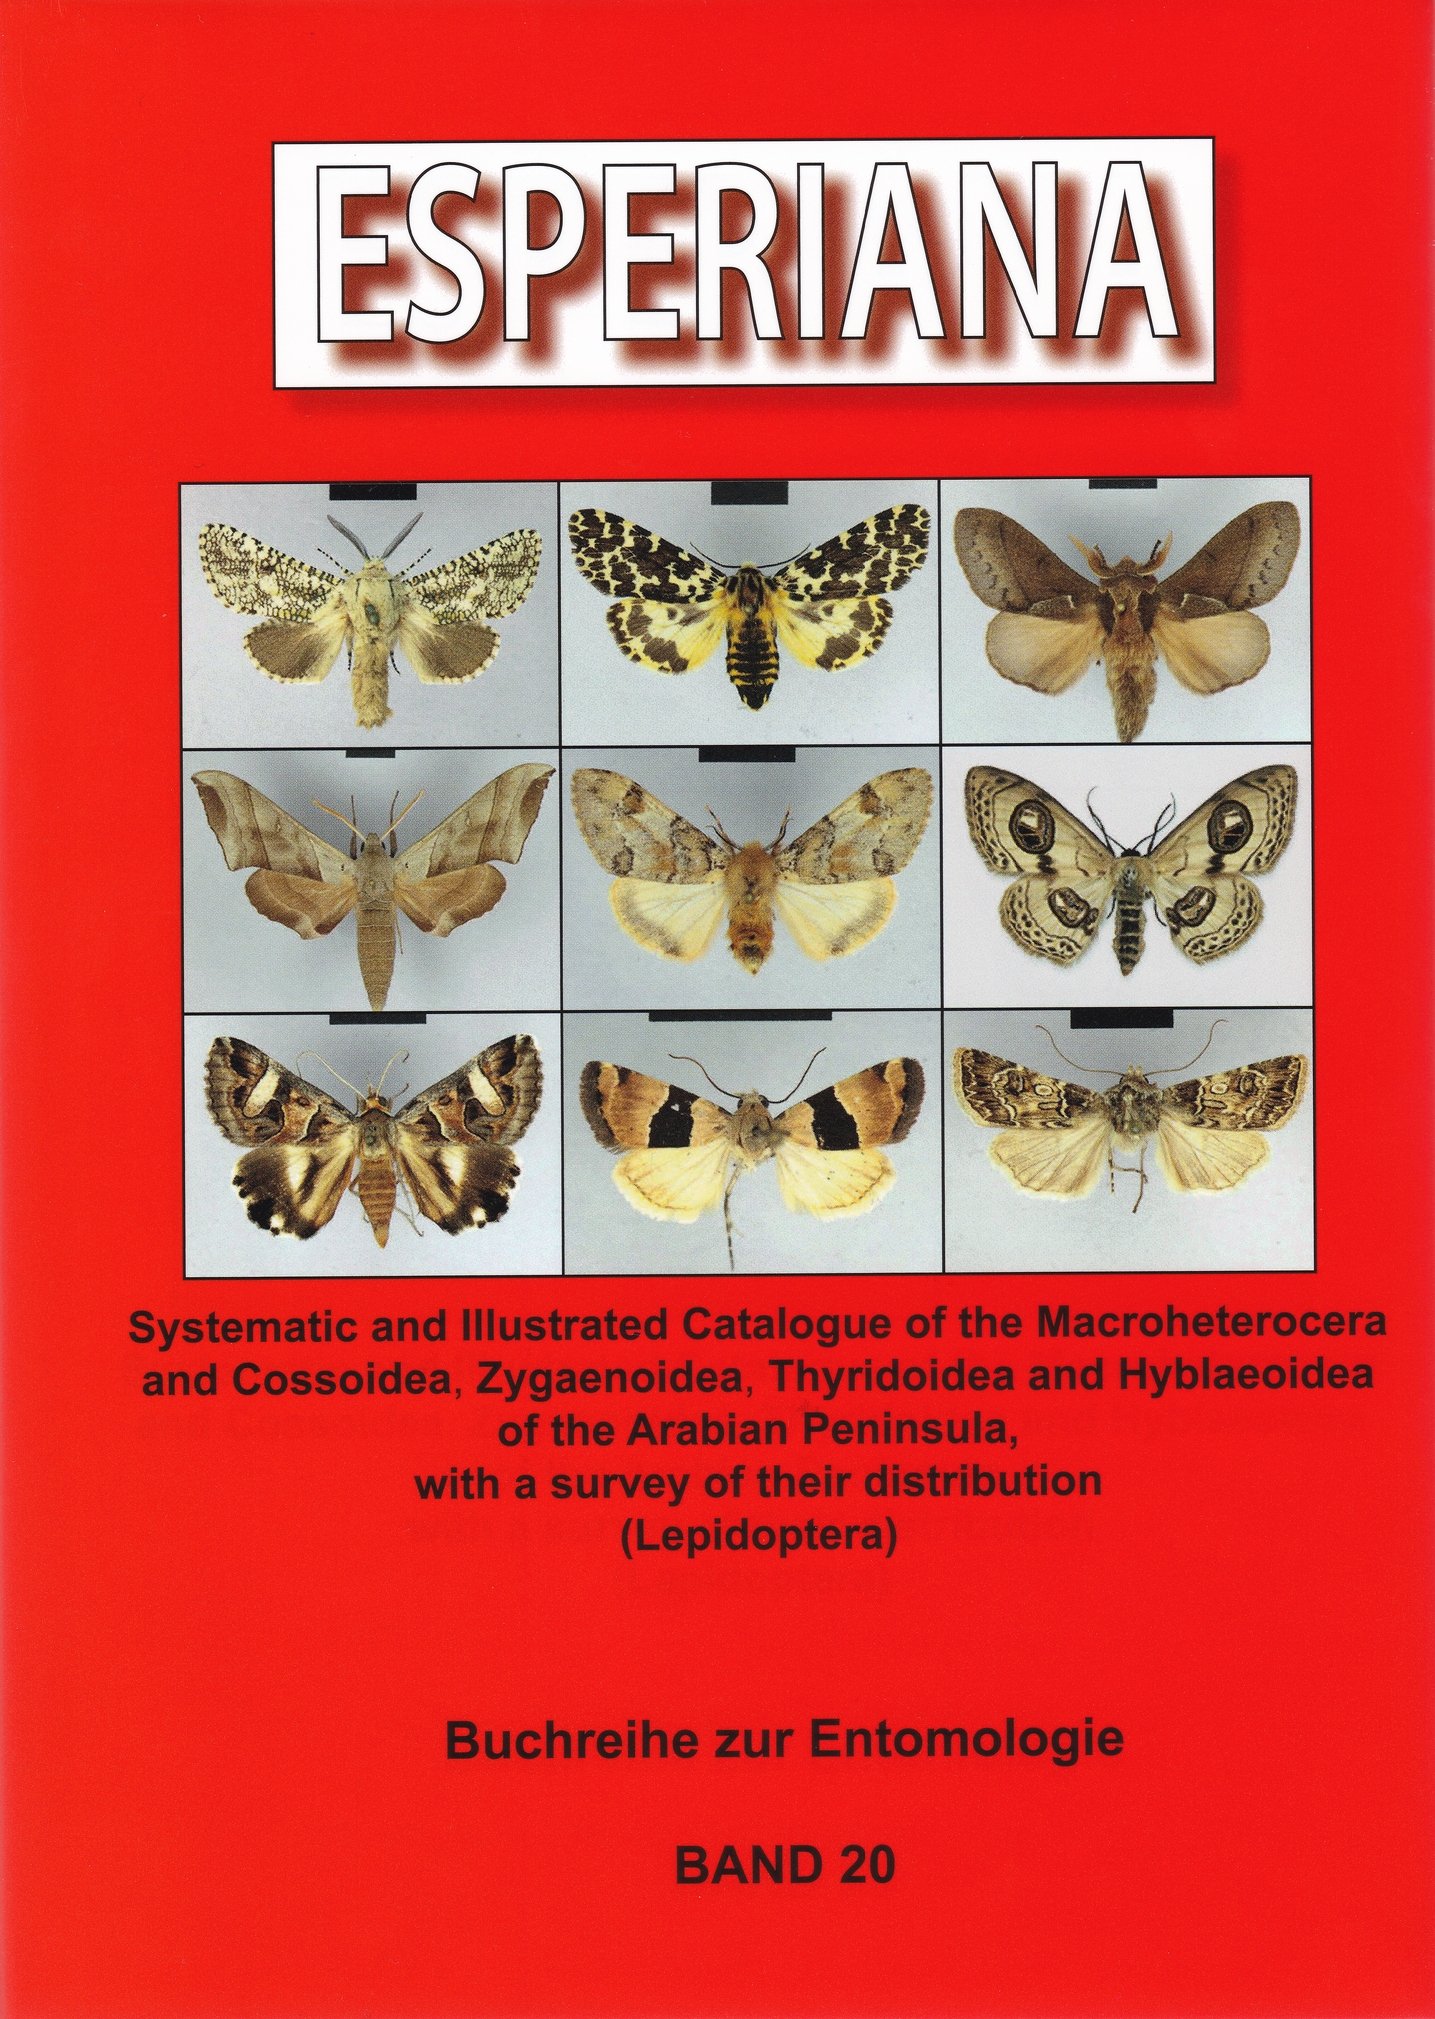 Esperiana. Buchreihe zur Entomologie 20/1. kötet - Text (Rippl-Rónai Múzeum CC BY-NC-ND)